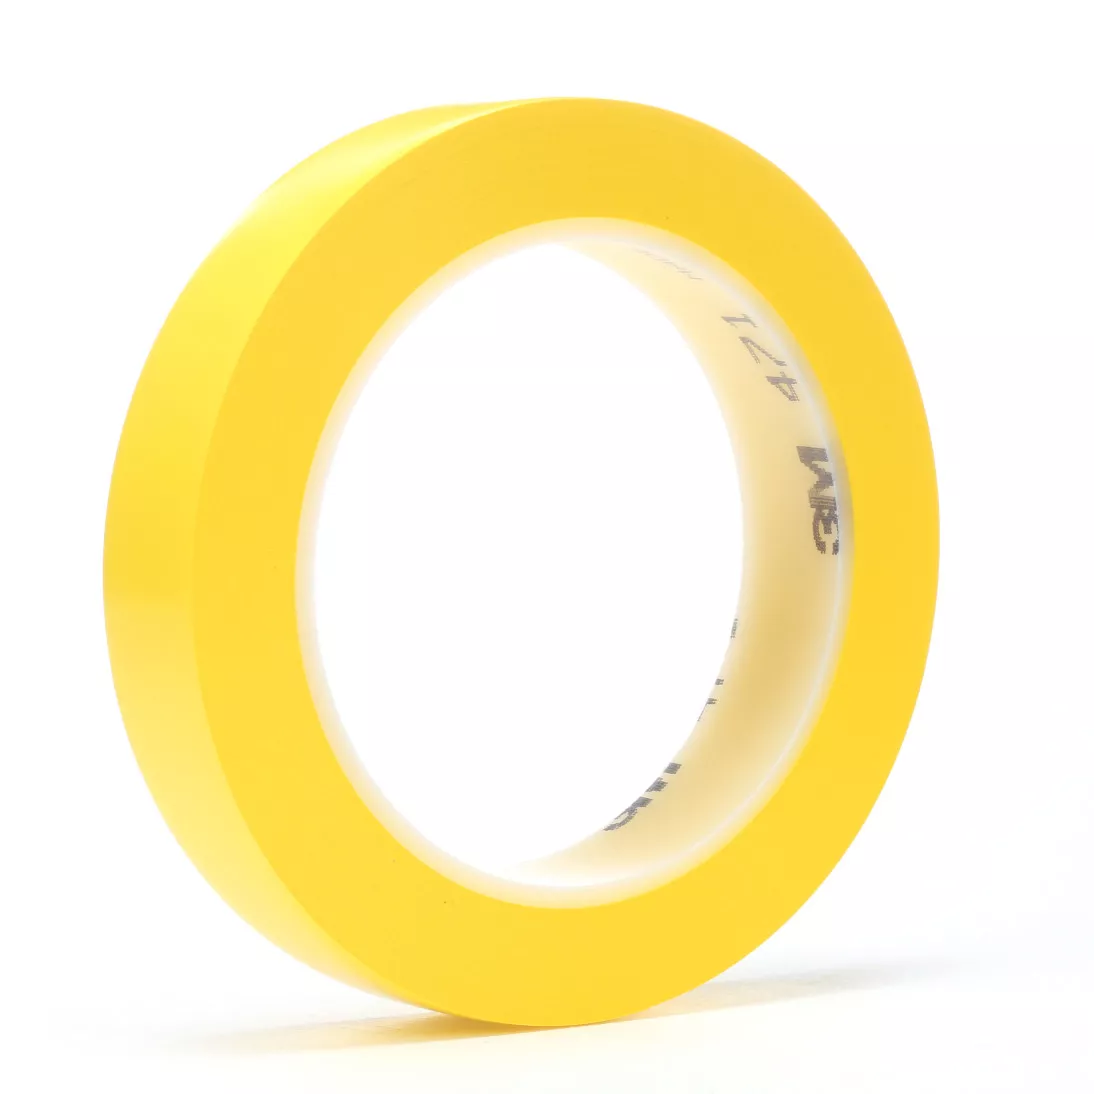 3M™ Vinyl Tape 471, Yellow, 1/4 in x 36 yd, 5.2 mil, 144 rolls per case